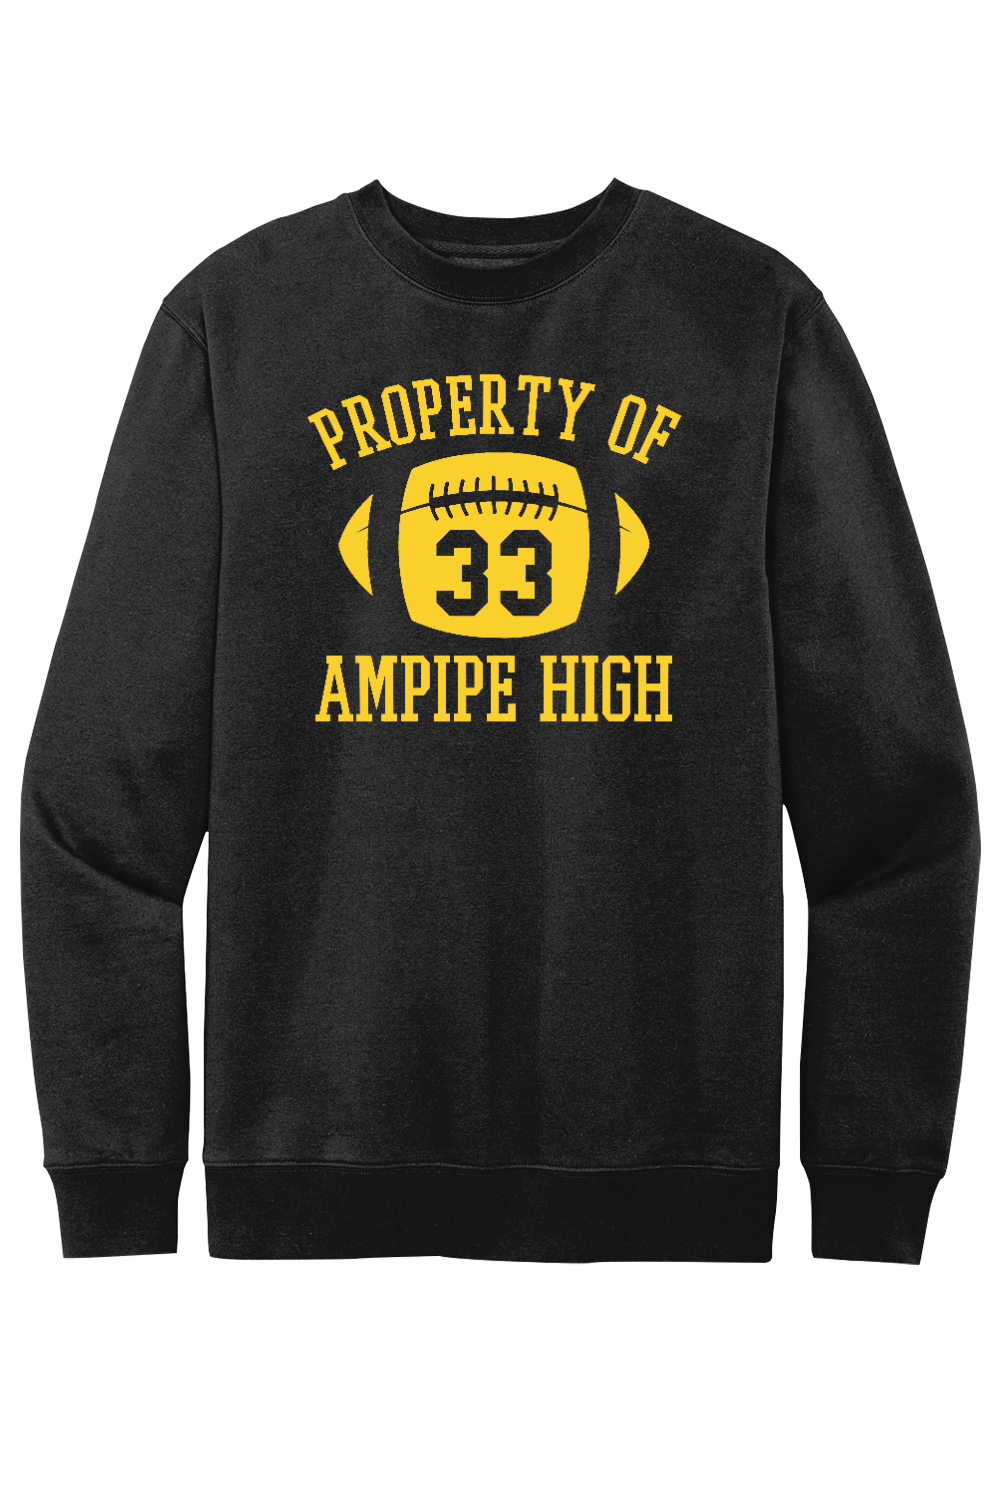 Property of Ampipe High (All the Right Moves) - Fleece Crewneck Sweatshirt - Yinzylvania